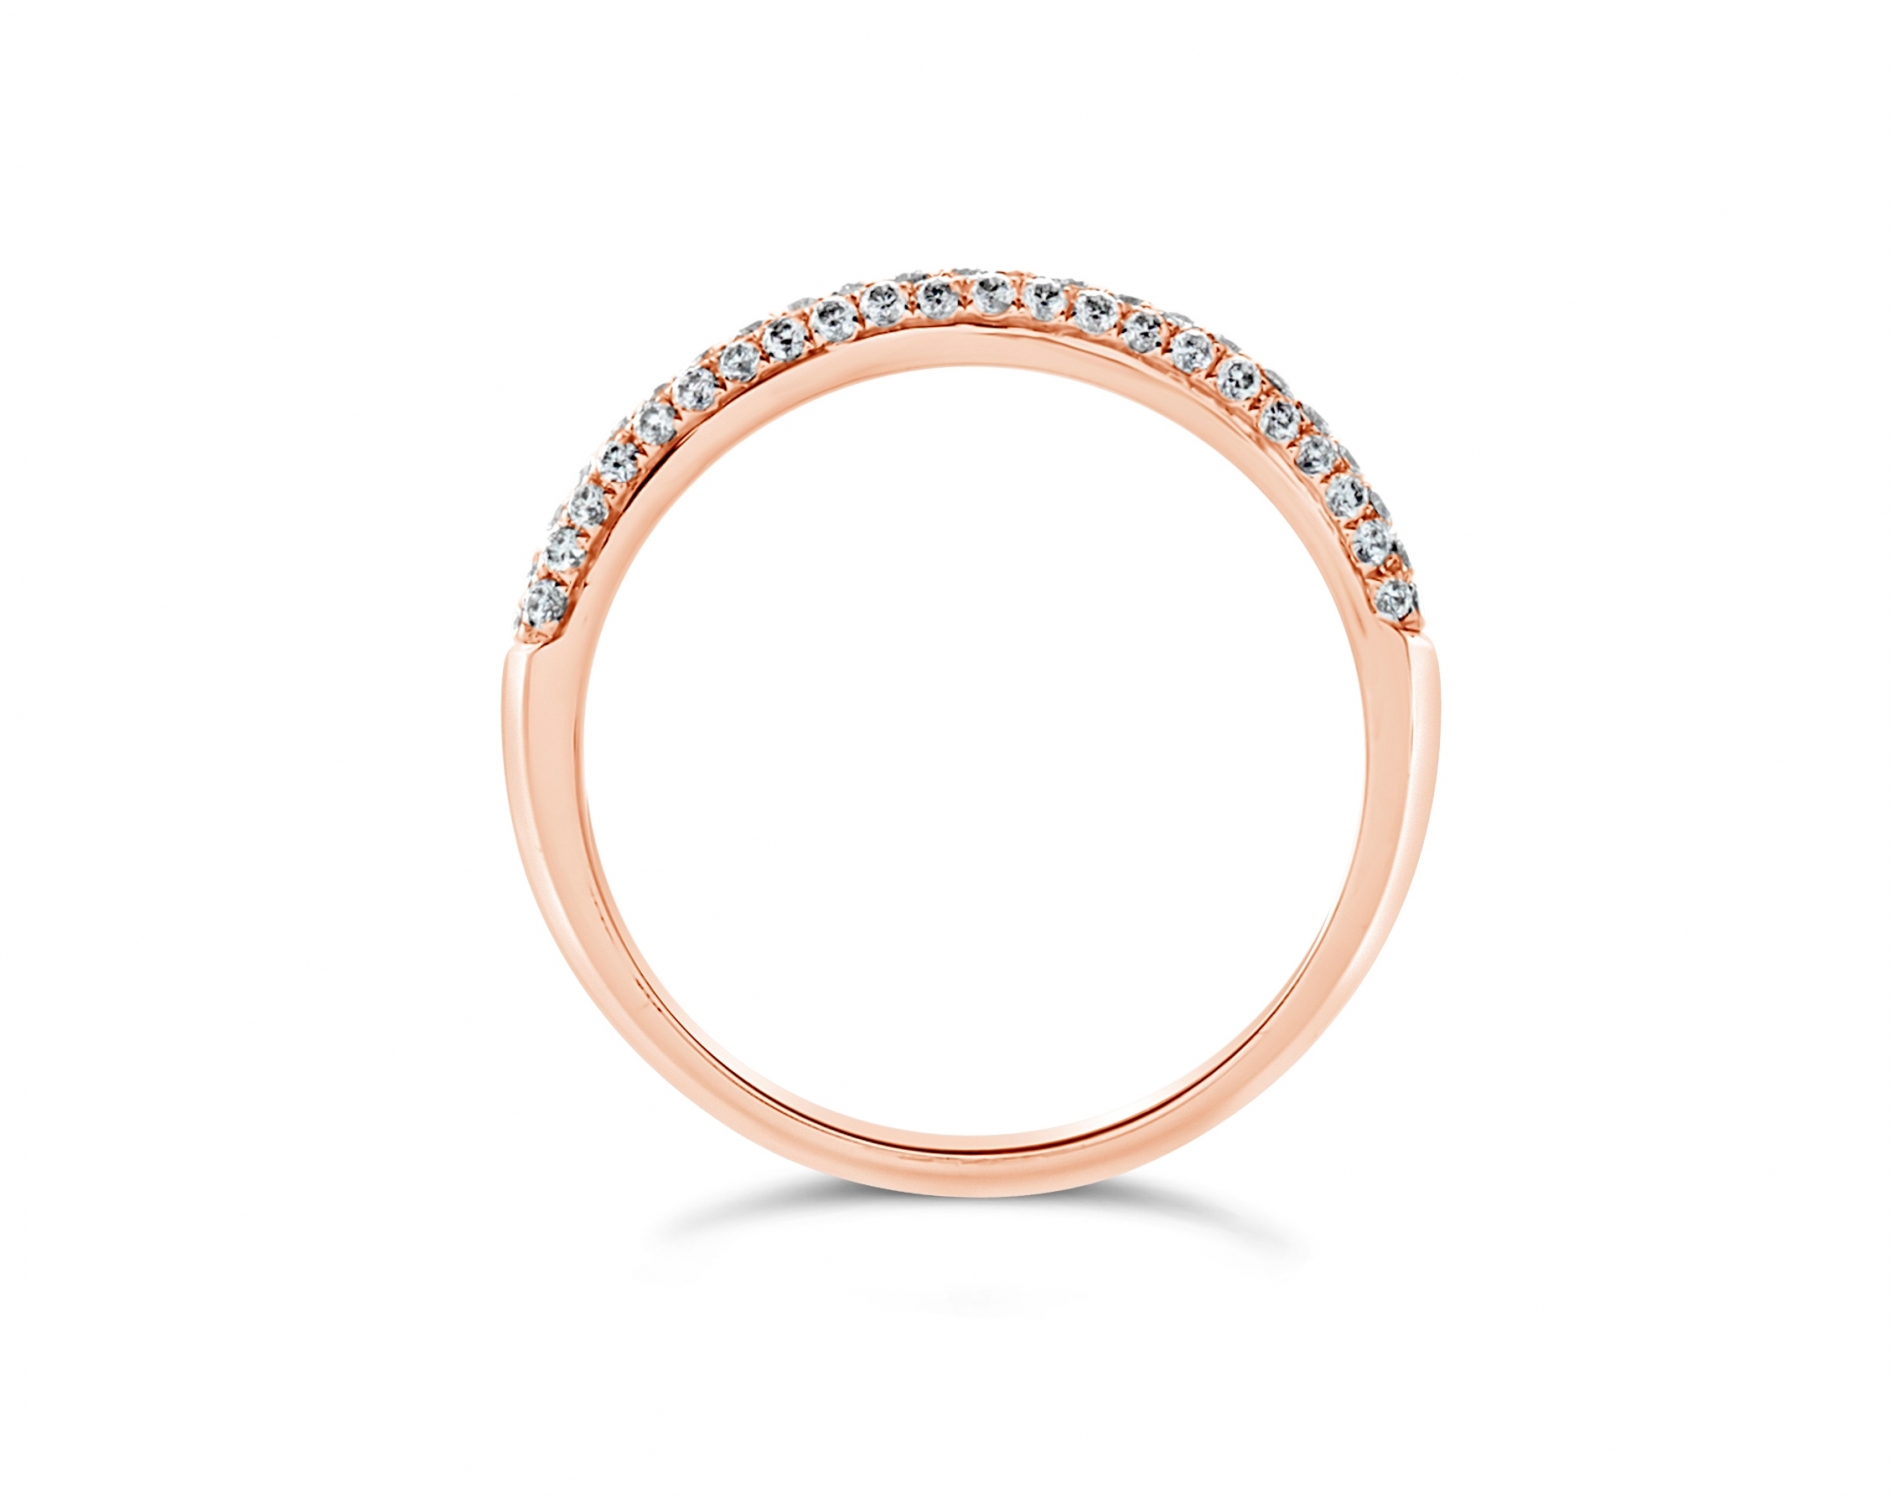 18k rose gold 3-row bombay half eternity round shaped diamond wedding ring